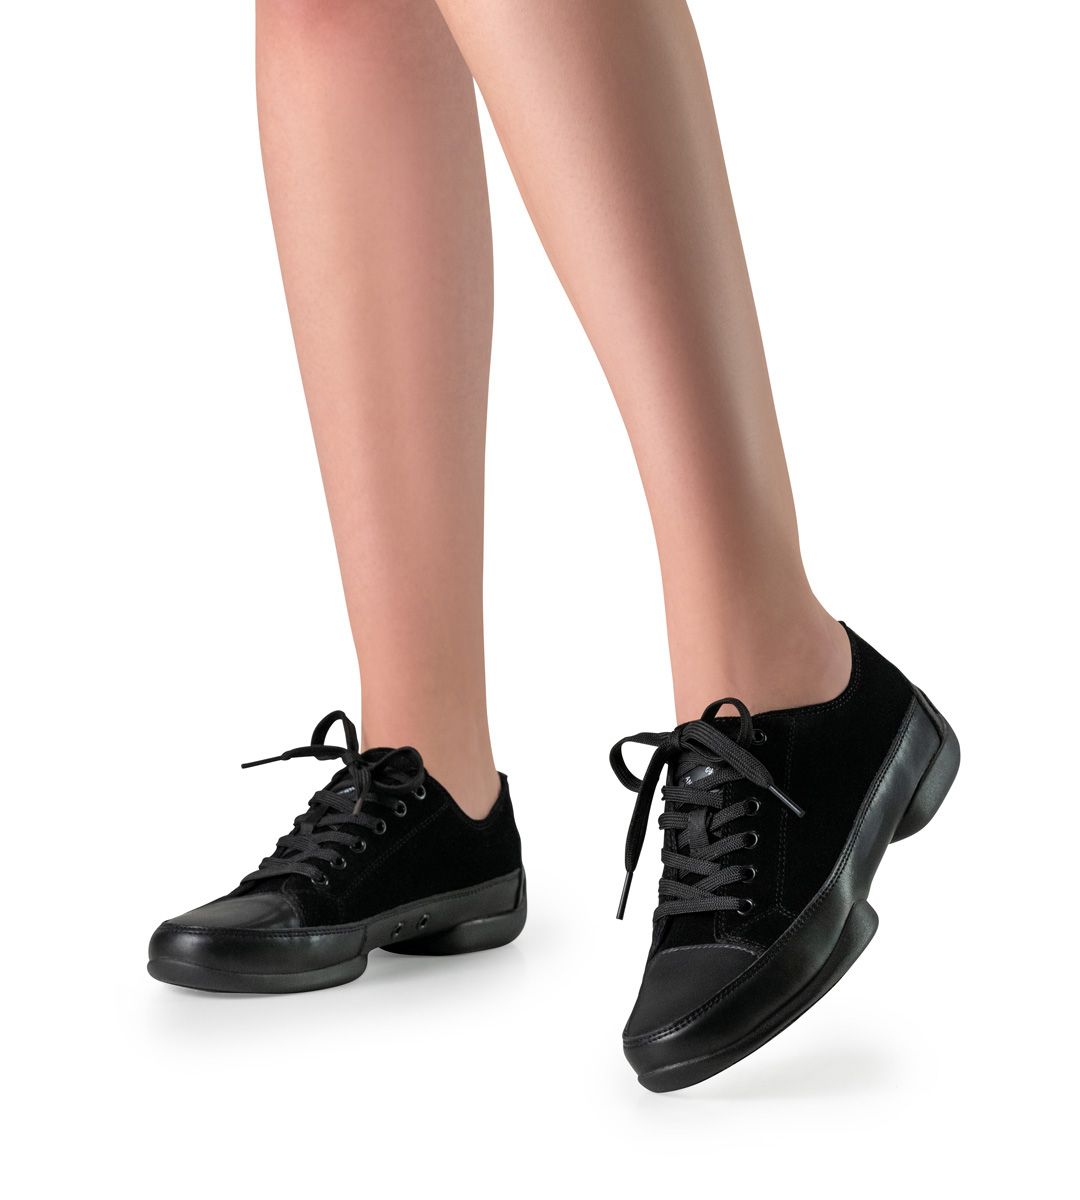 Ladies Dance Practice Sneakers in Black Suede with Flexible PU Sole and Heel